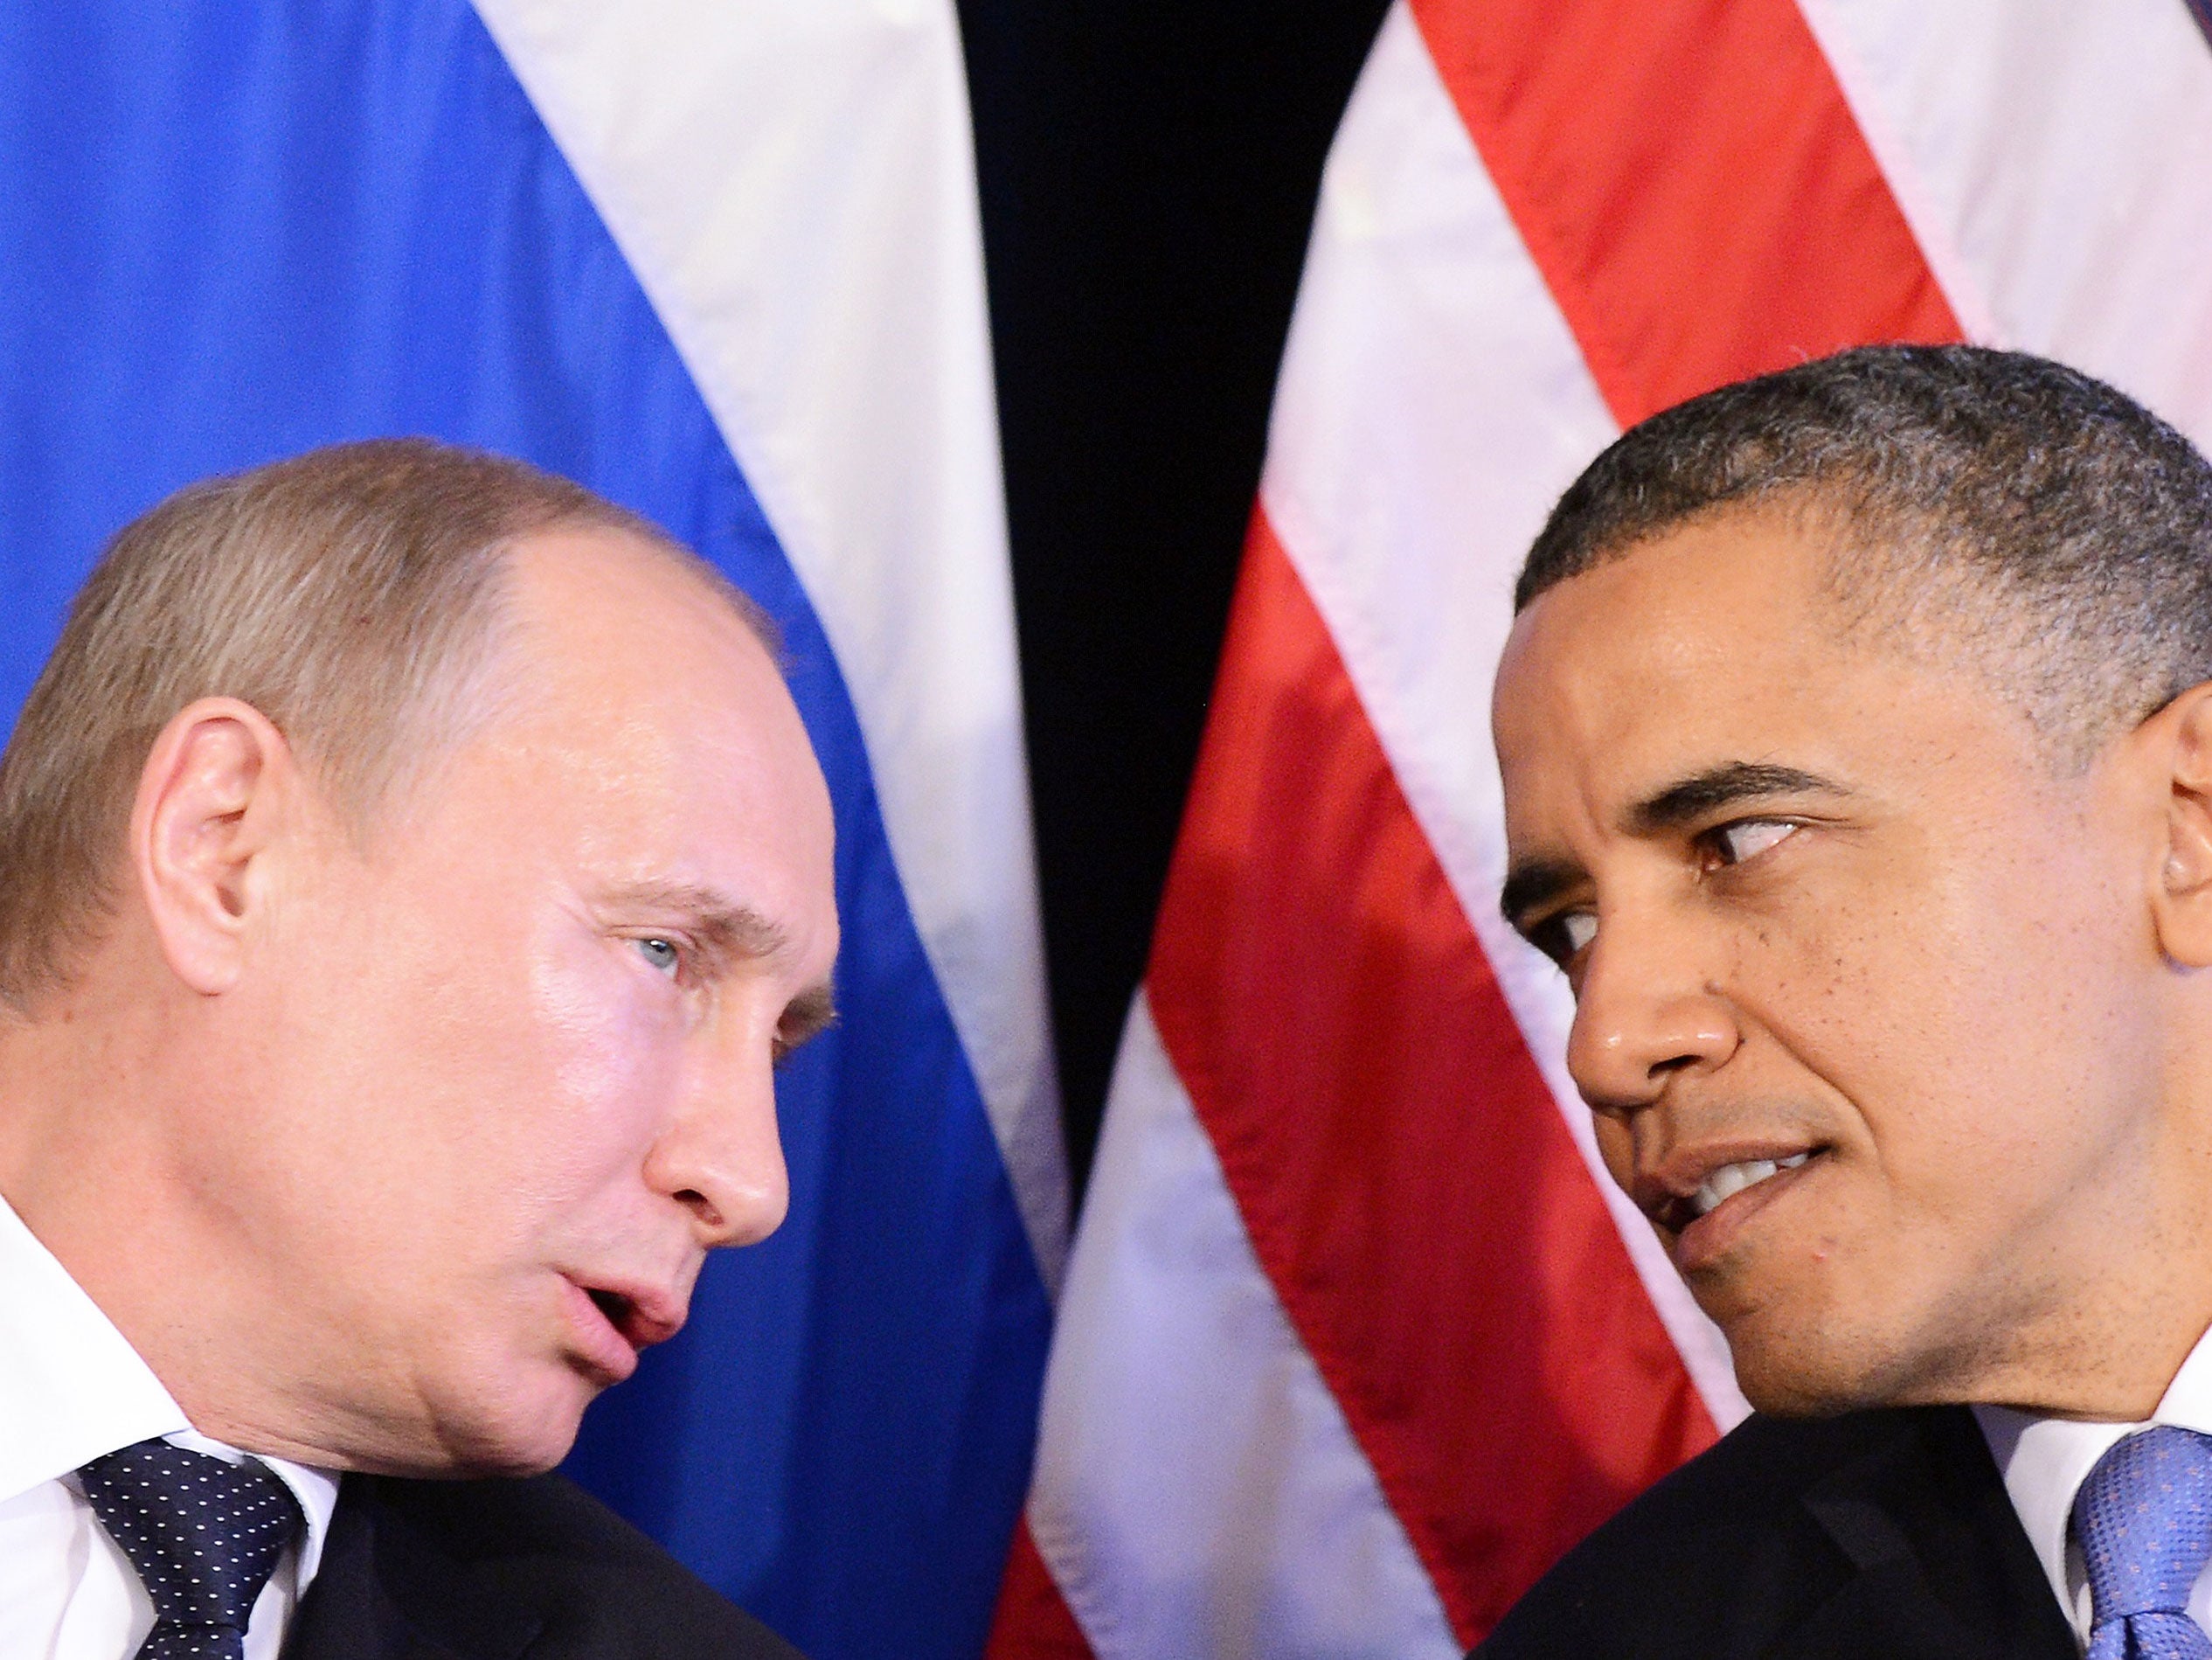 Barack Obama and Vladimir Putin's relationship has worsened since the start of the Ukraine crisis